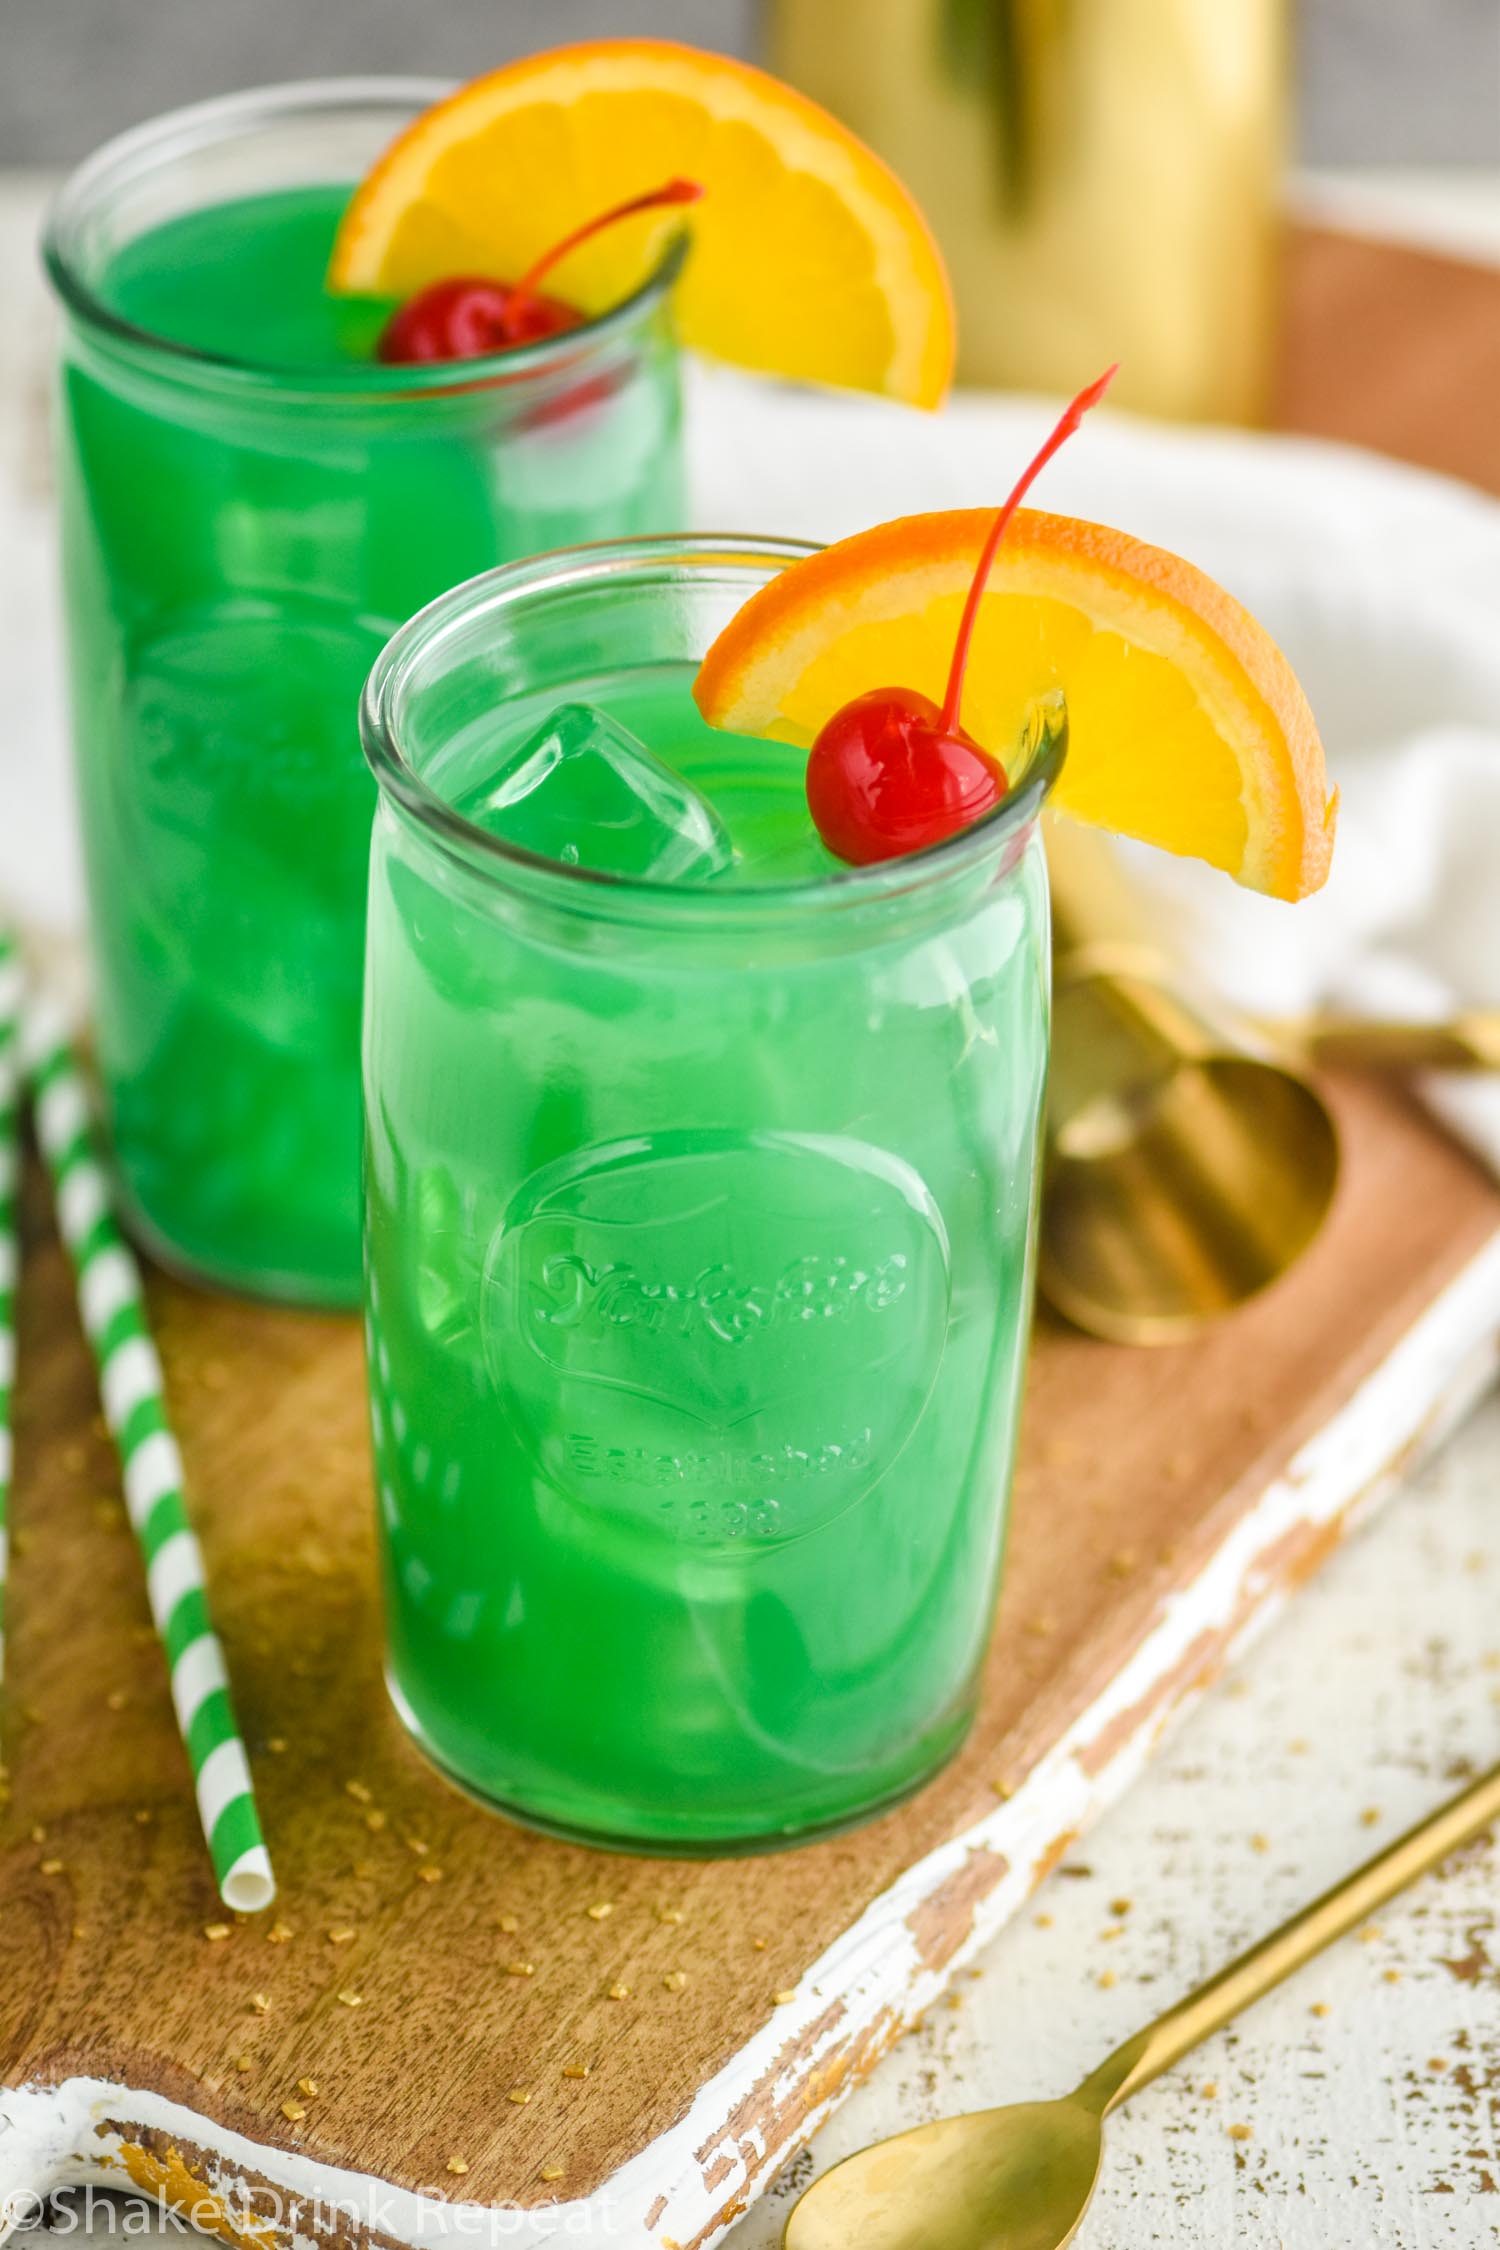 latin leprechaun drink